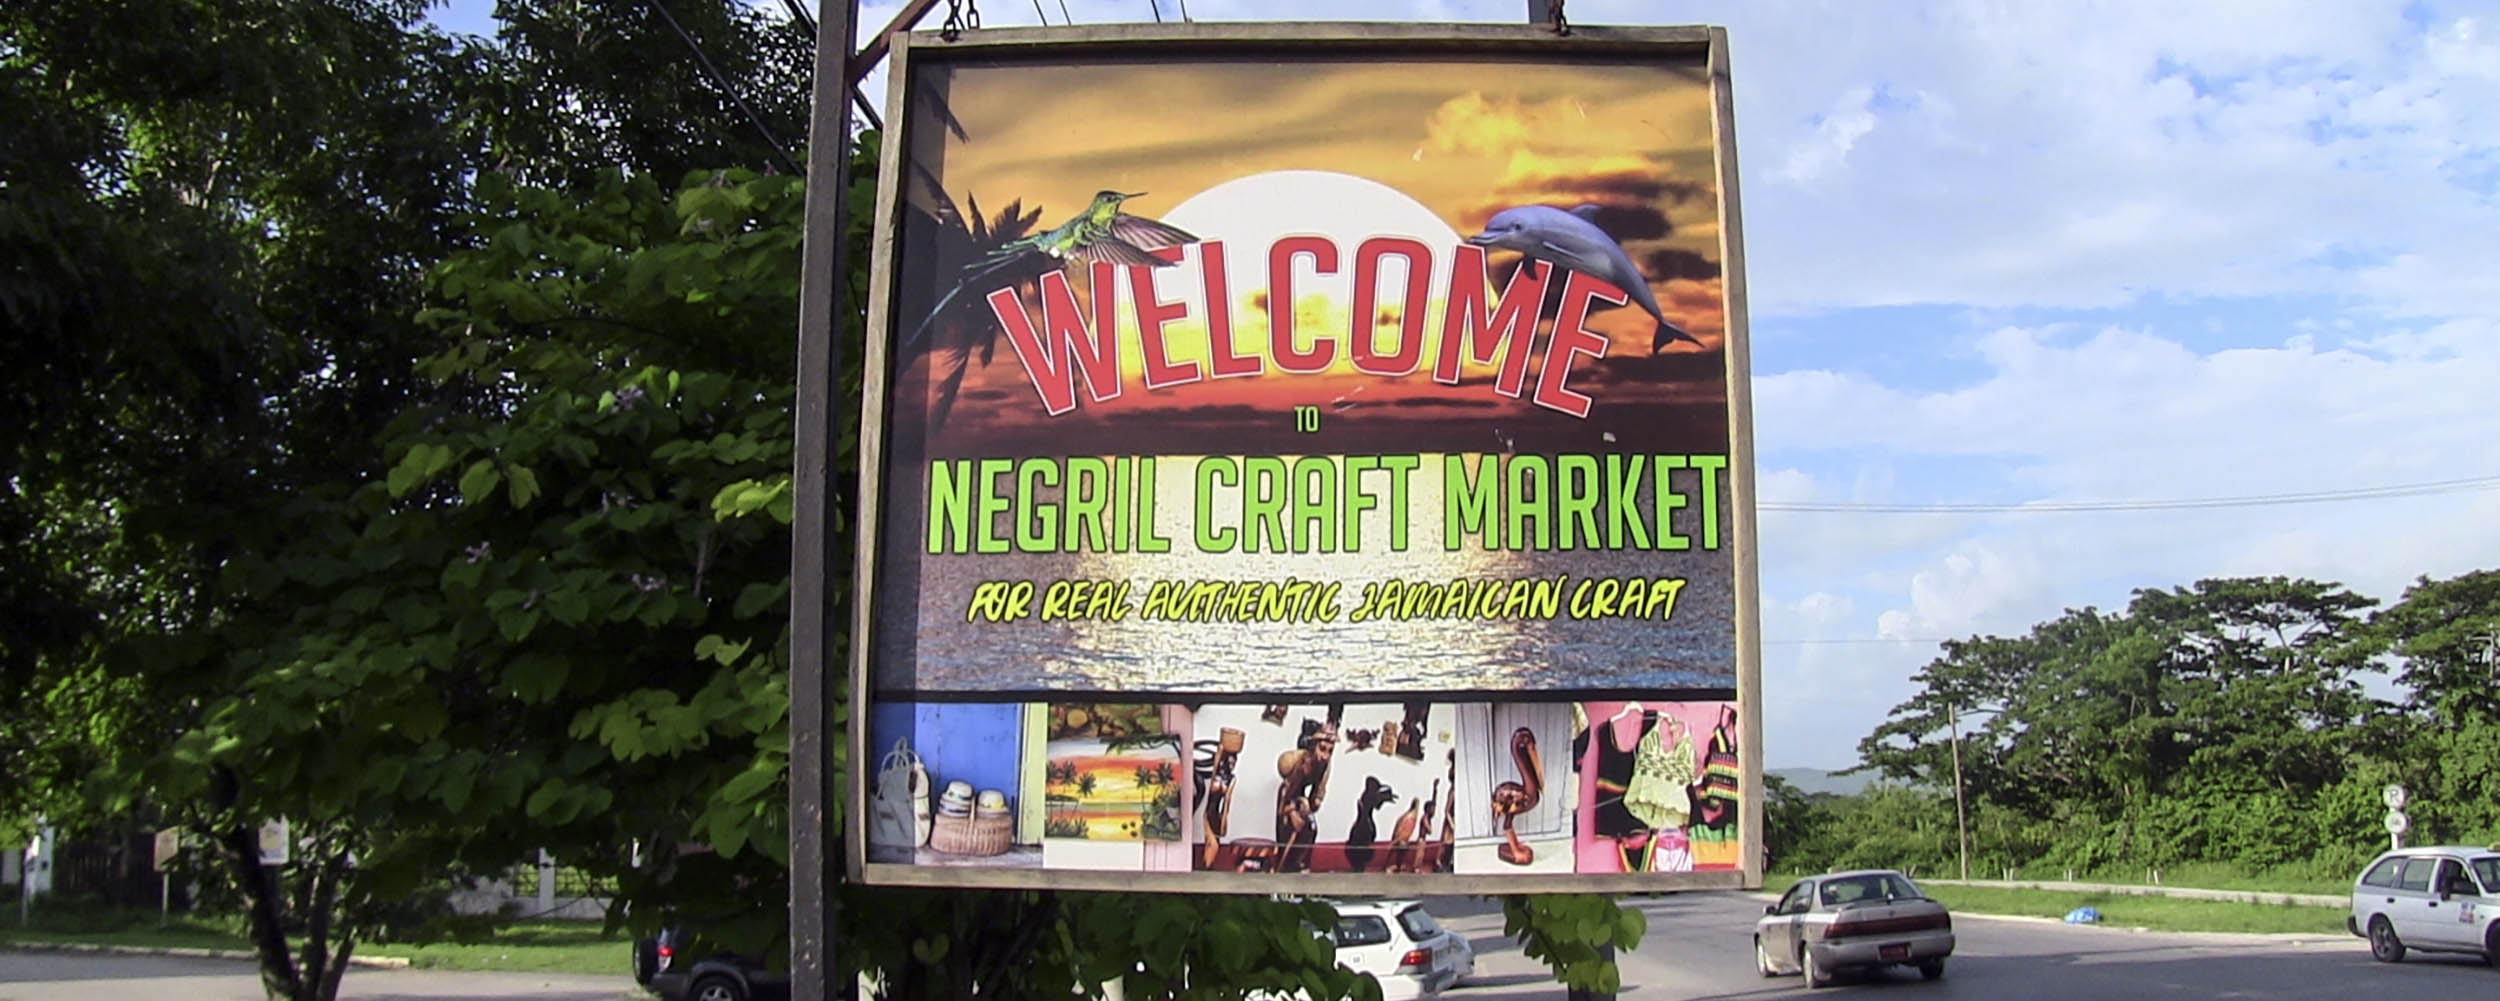 Negril Craft Market - Norman Manley Boulevard - Negril Jamaica